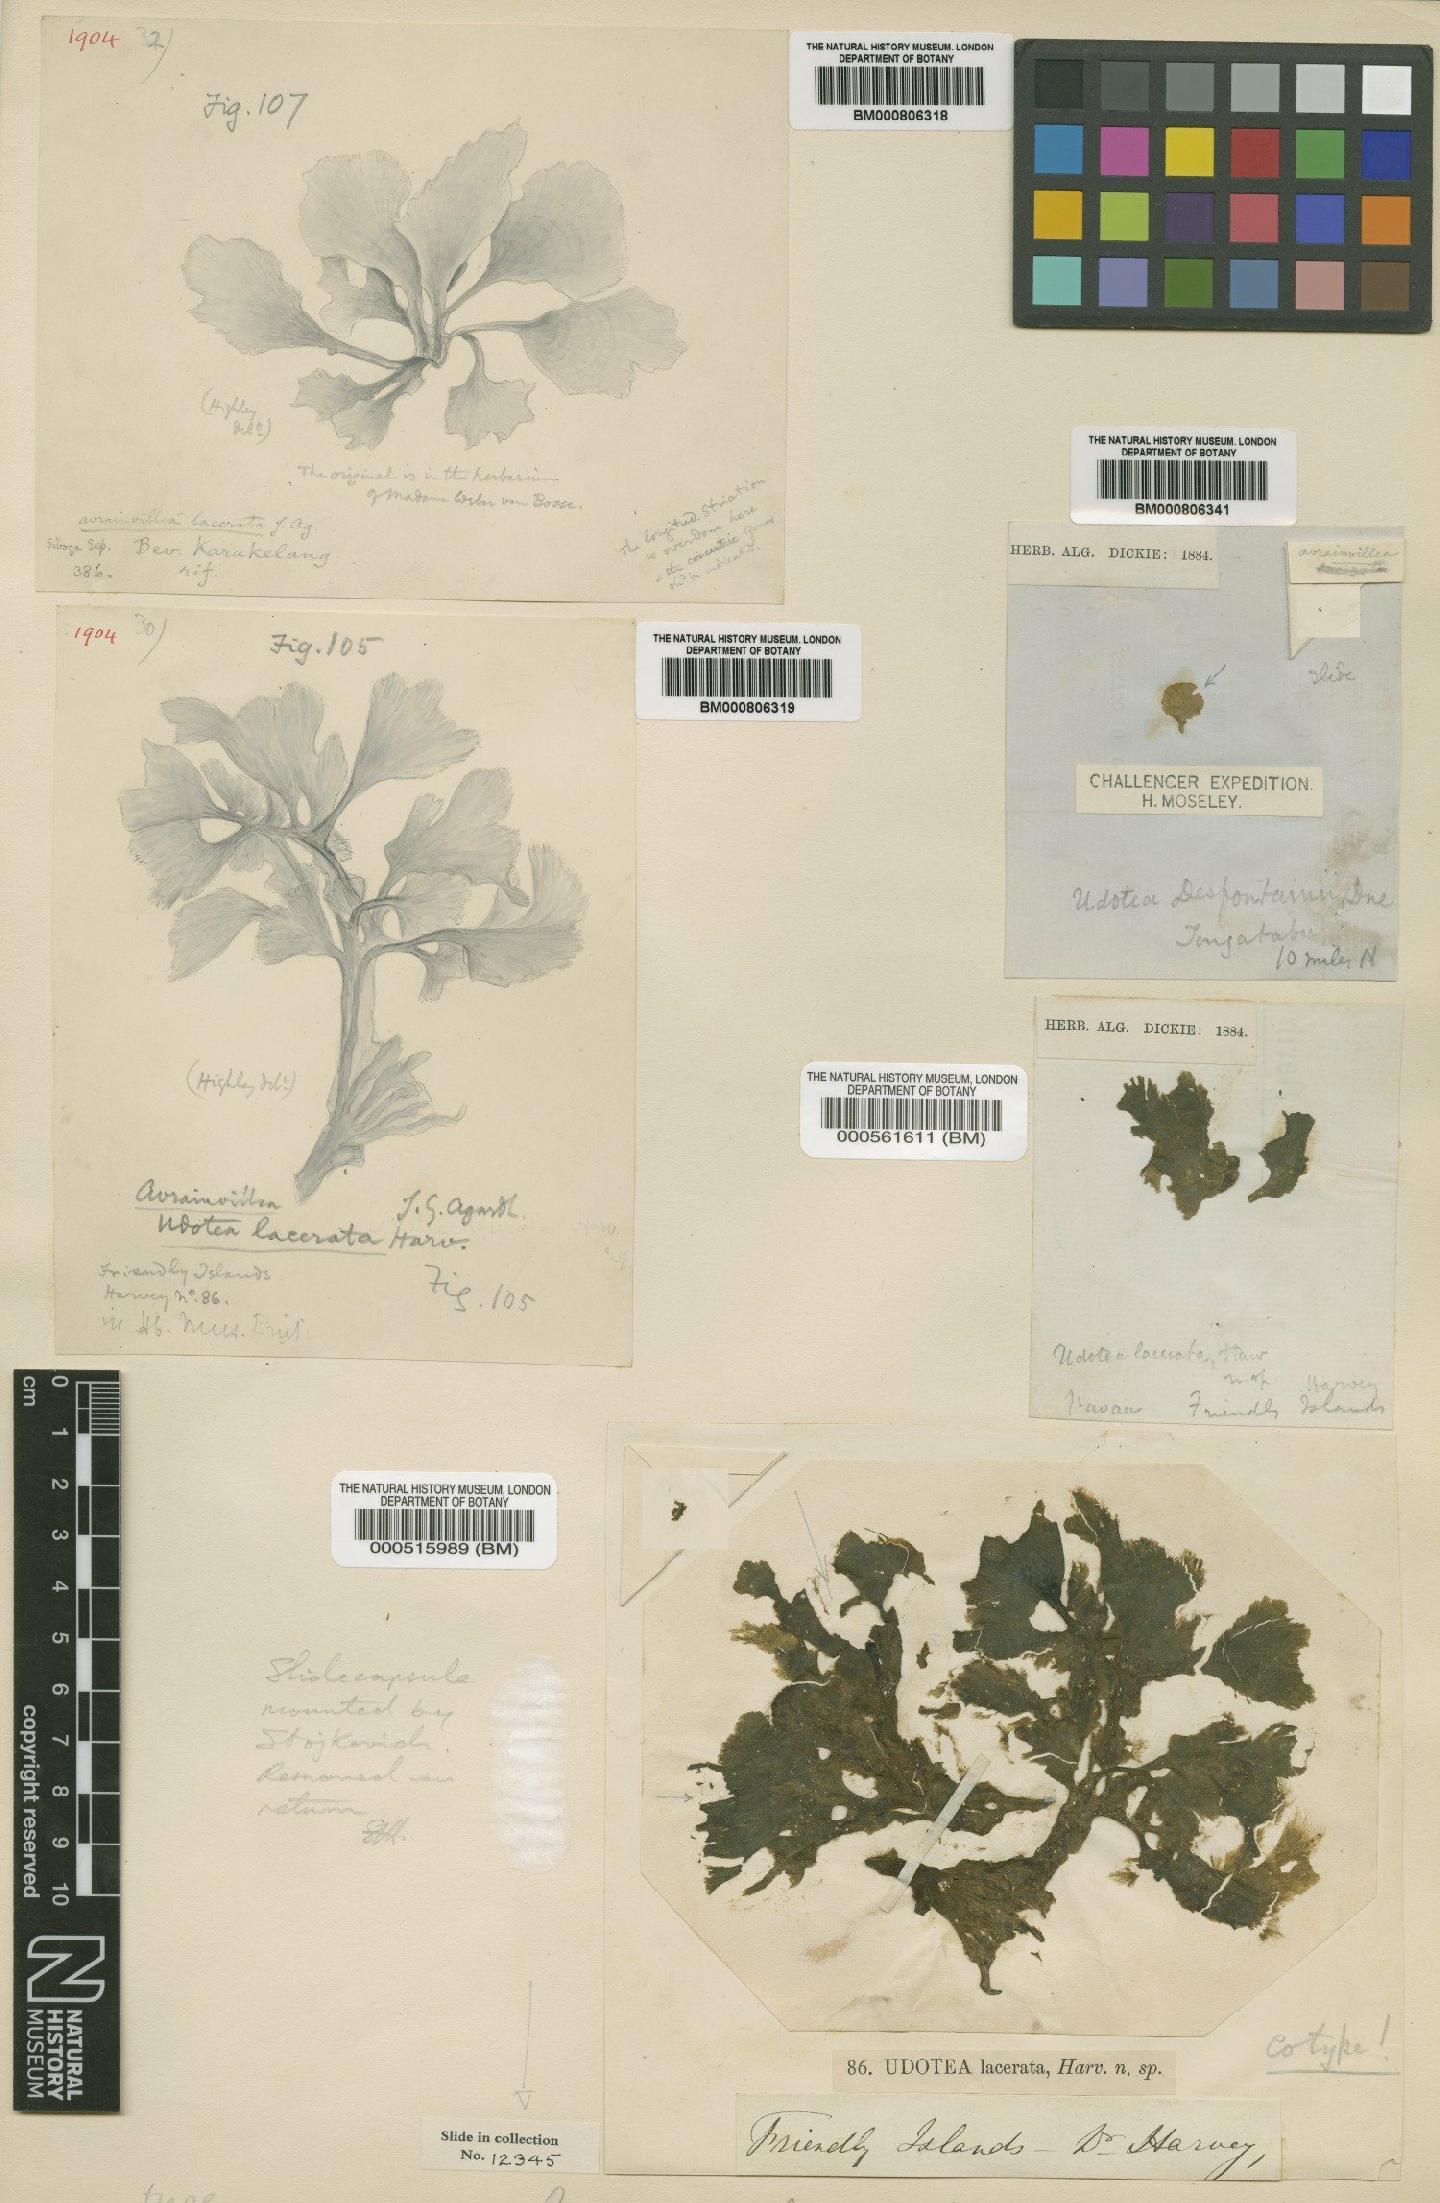 To NHMUK collection (Avrainvillea lacerata Harv. ex J.Agardh; NHMUK:ecatalogue:4514789)